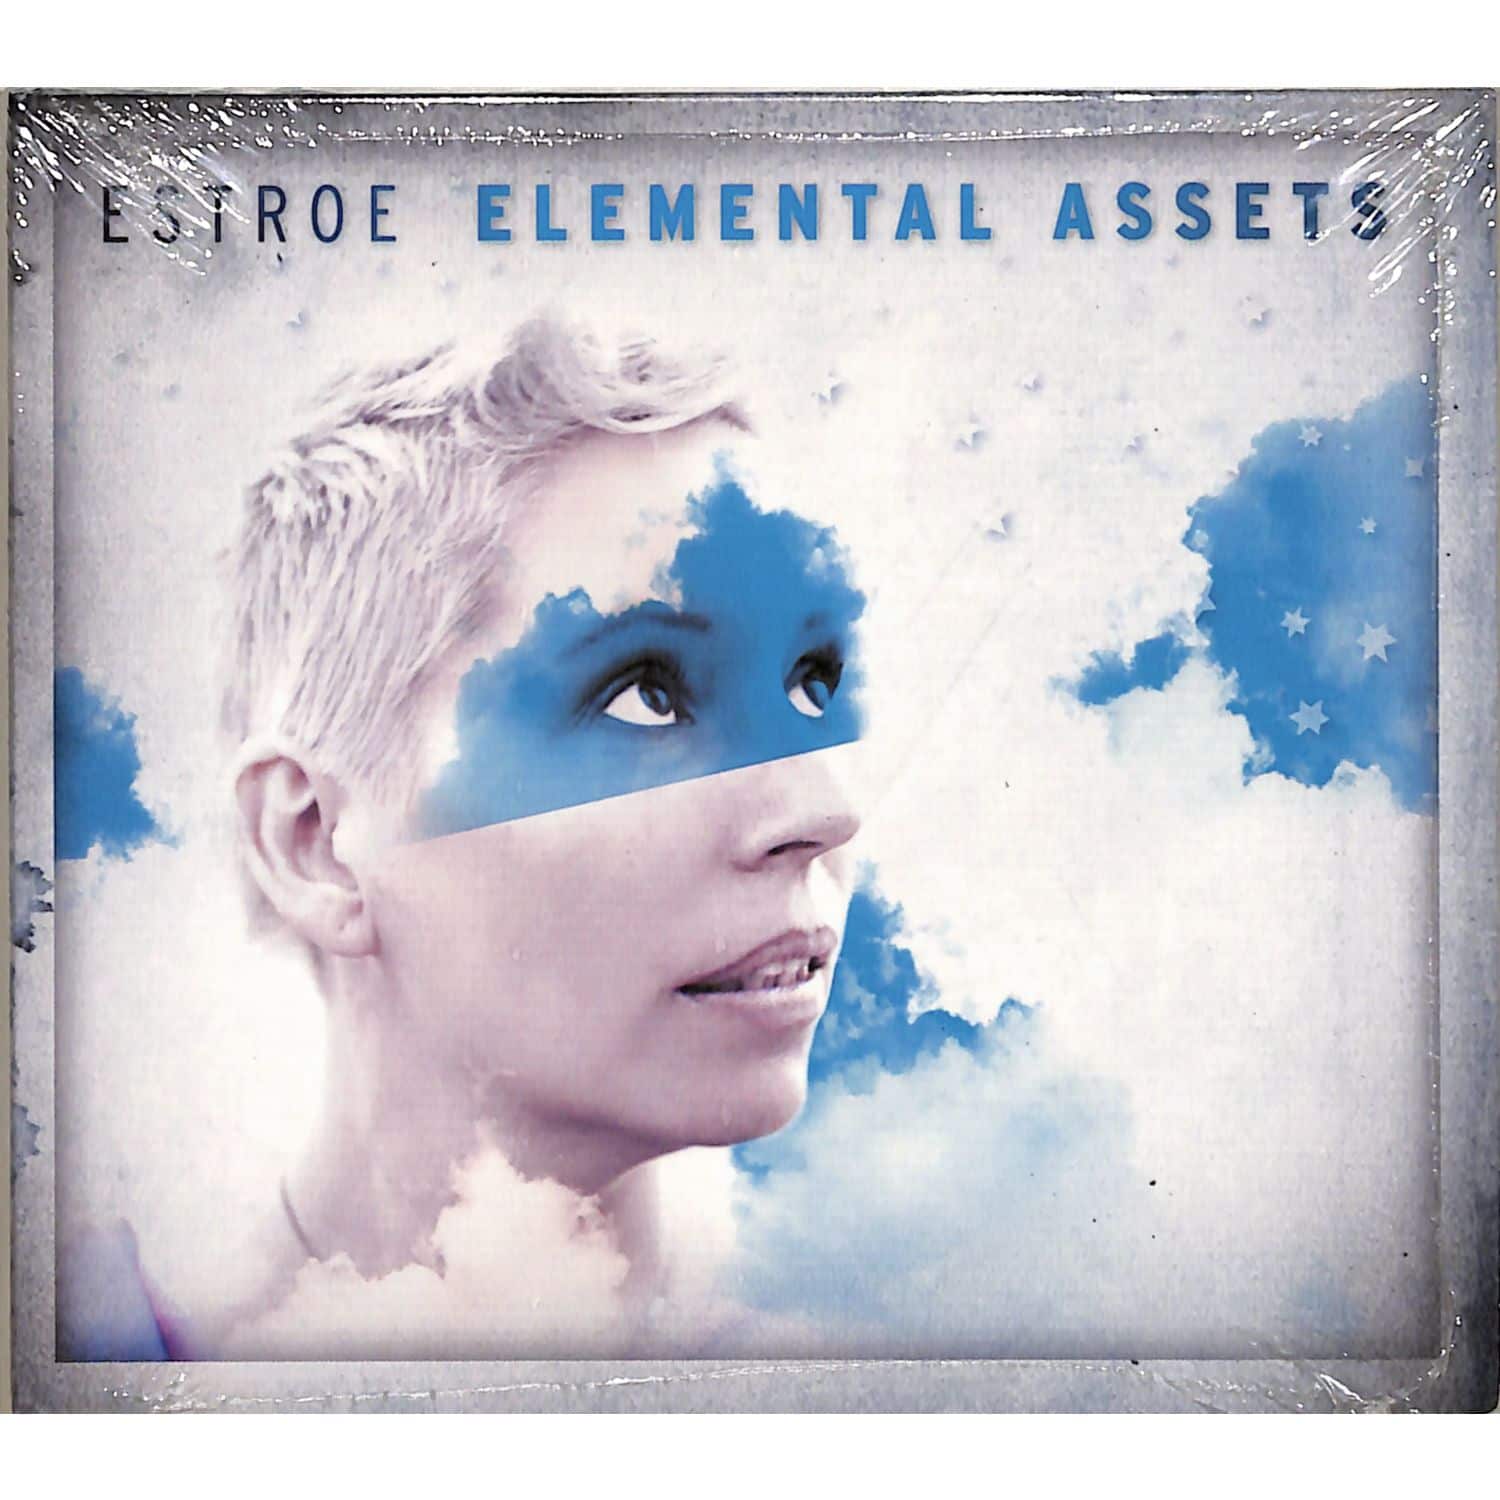 Estroe - Elemental Assests 